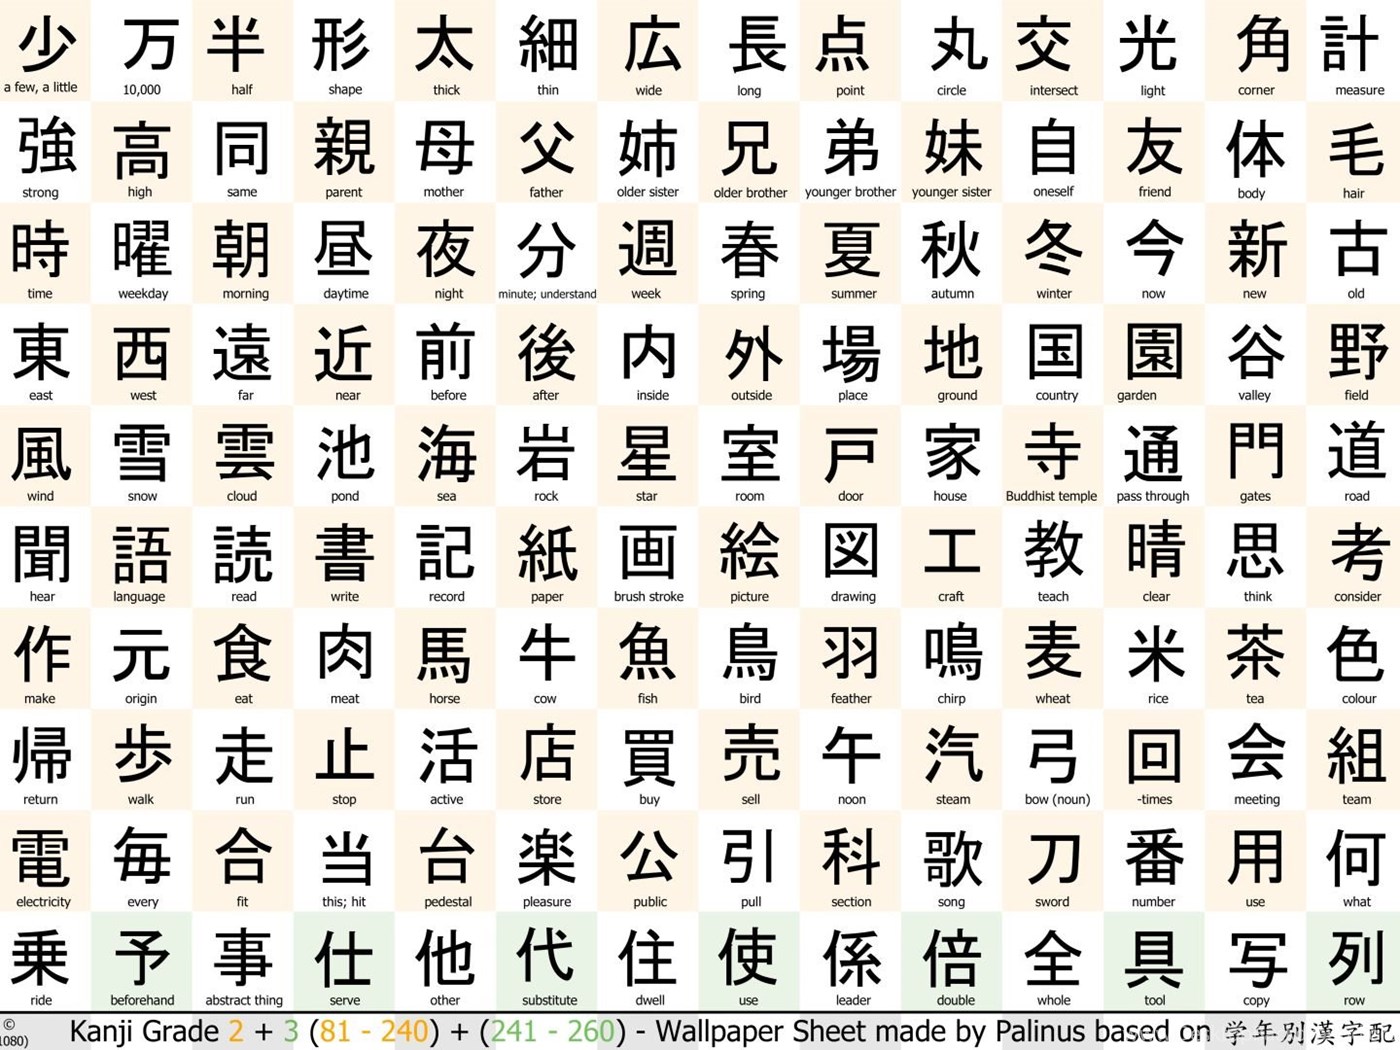 Download Wallpapers Kanji Training Grade 2 1080p By Palinus On DeviantArt F...